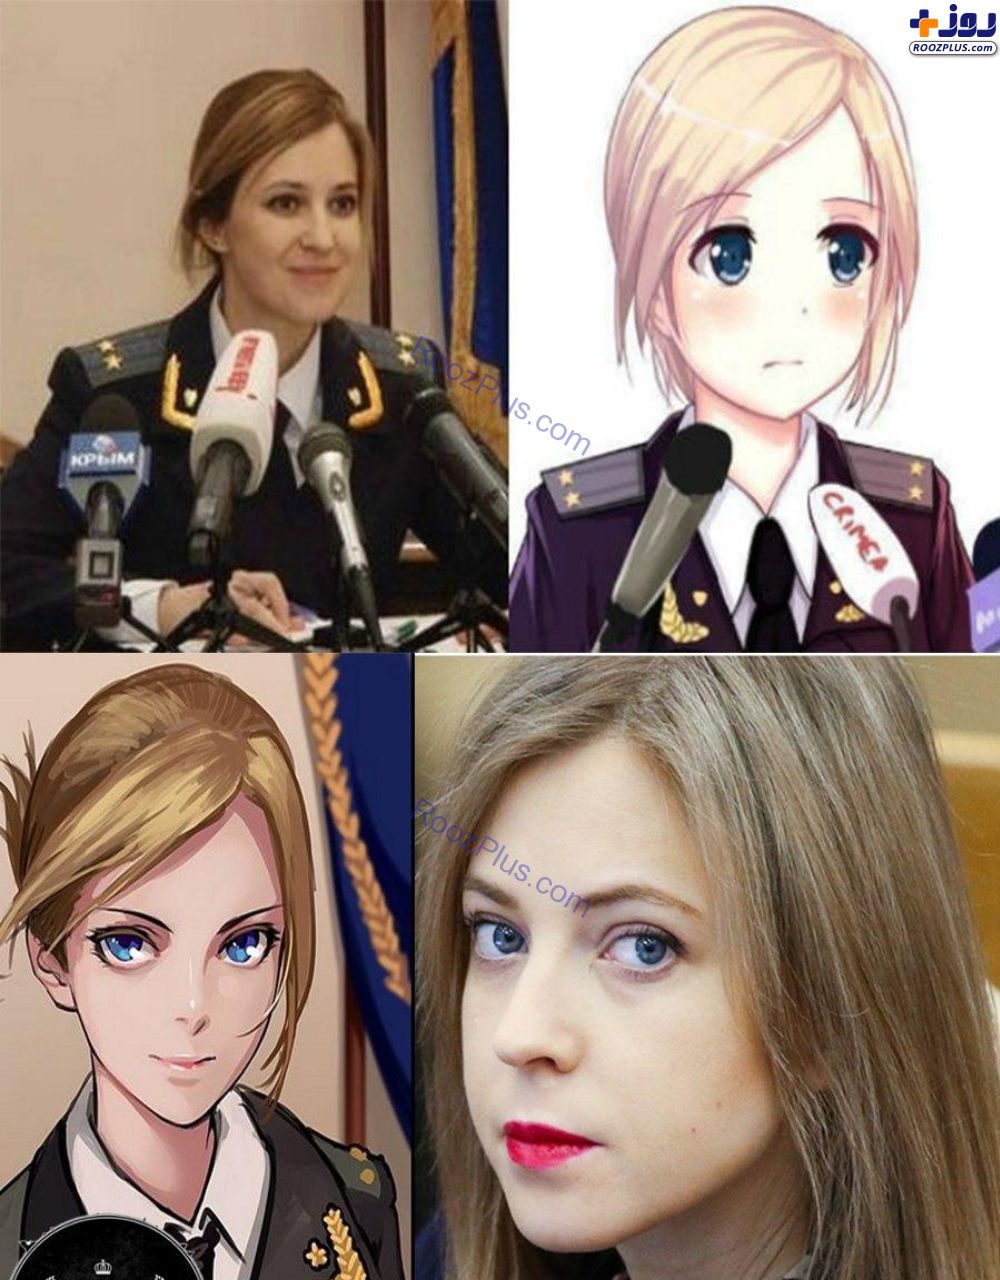 پلیس زن